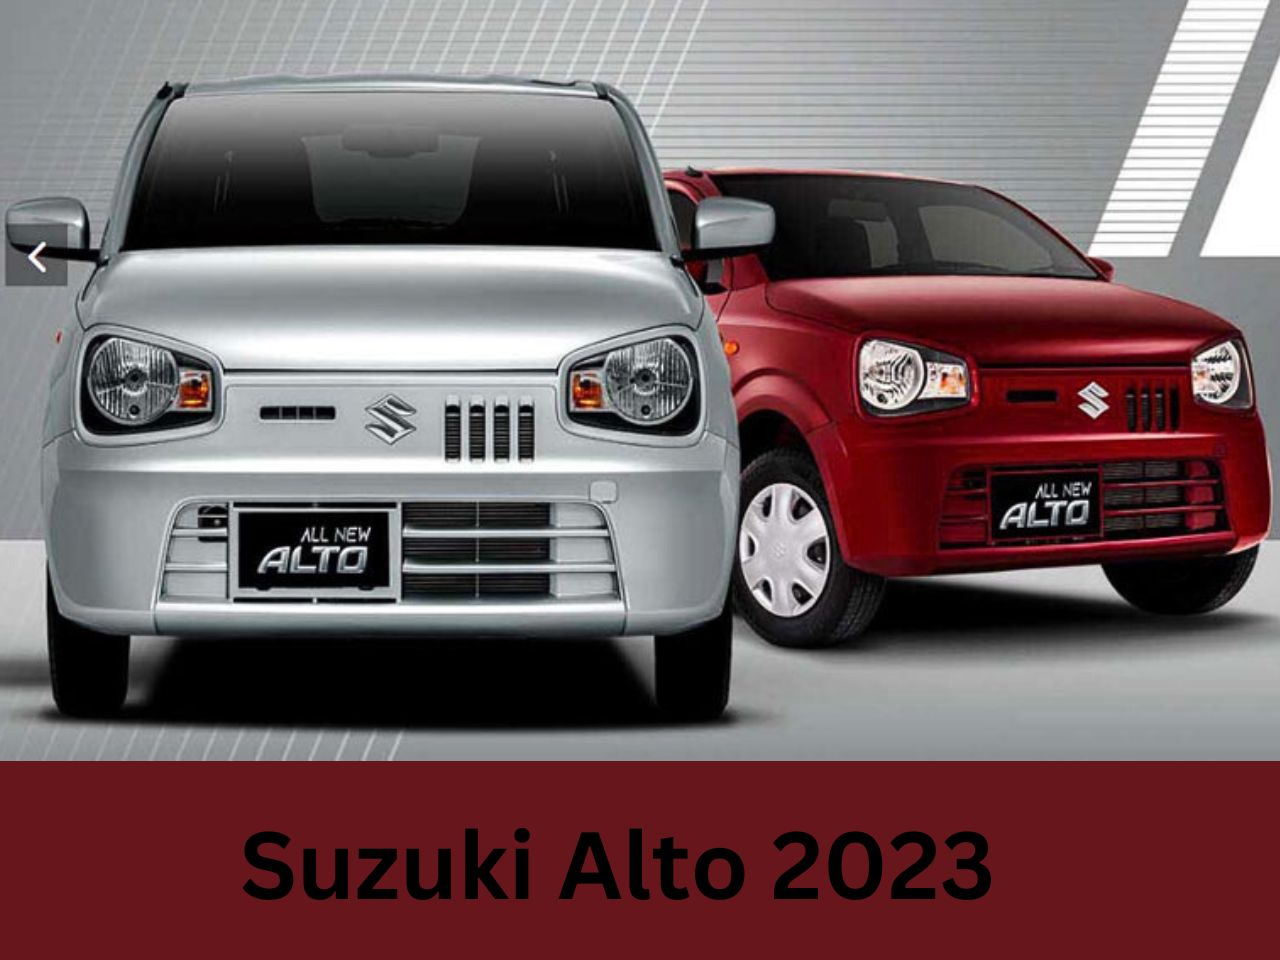 Suzuki Alto 2023 Maintenance Guide - Pakistan